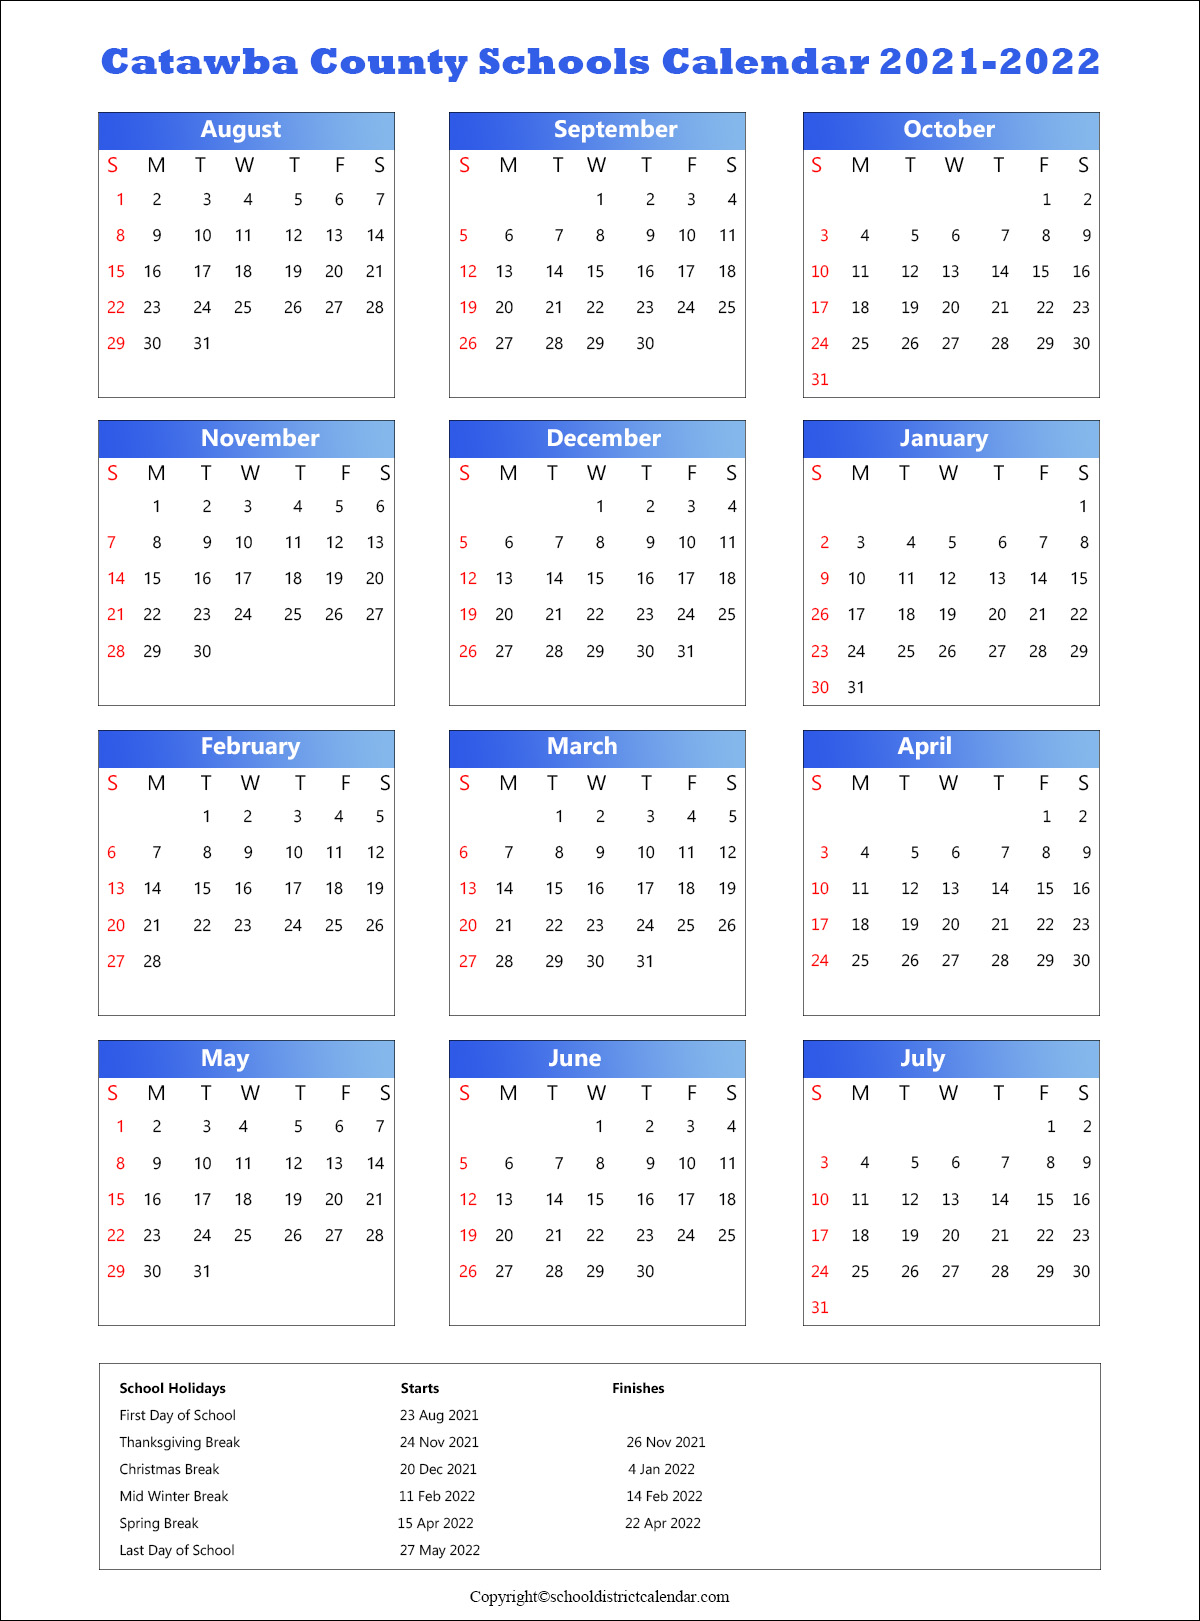 Catawba County Schools District Calendar 2021